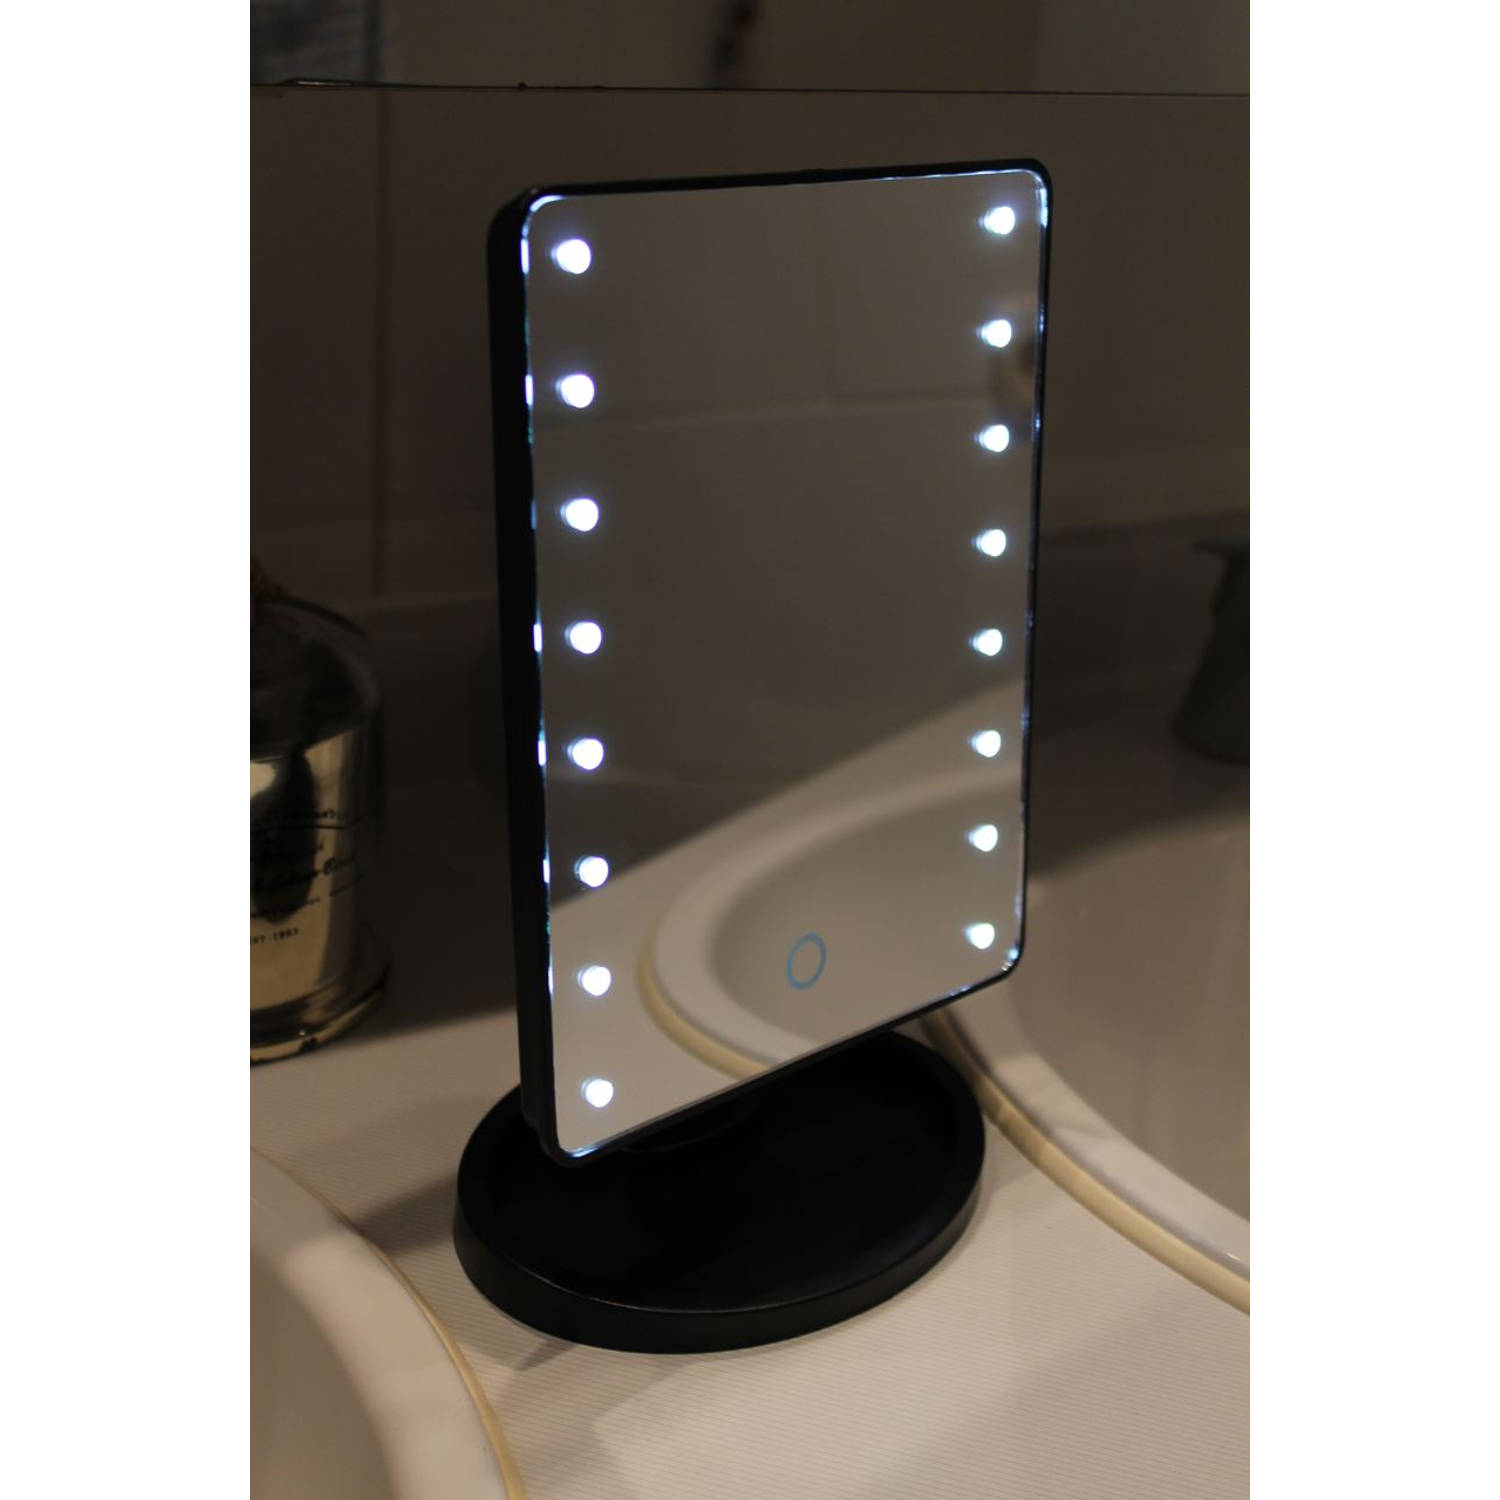 Graden Celsius Vorming Grootste Touch Screen Make-Up Spiegel met LED verlichting - Zwart | Blokker